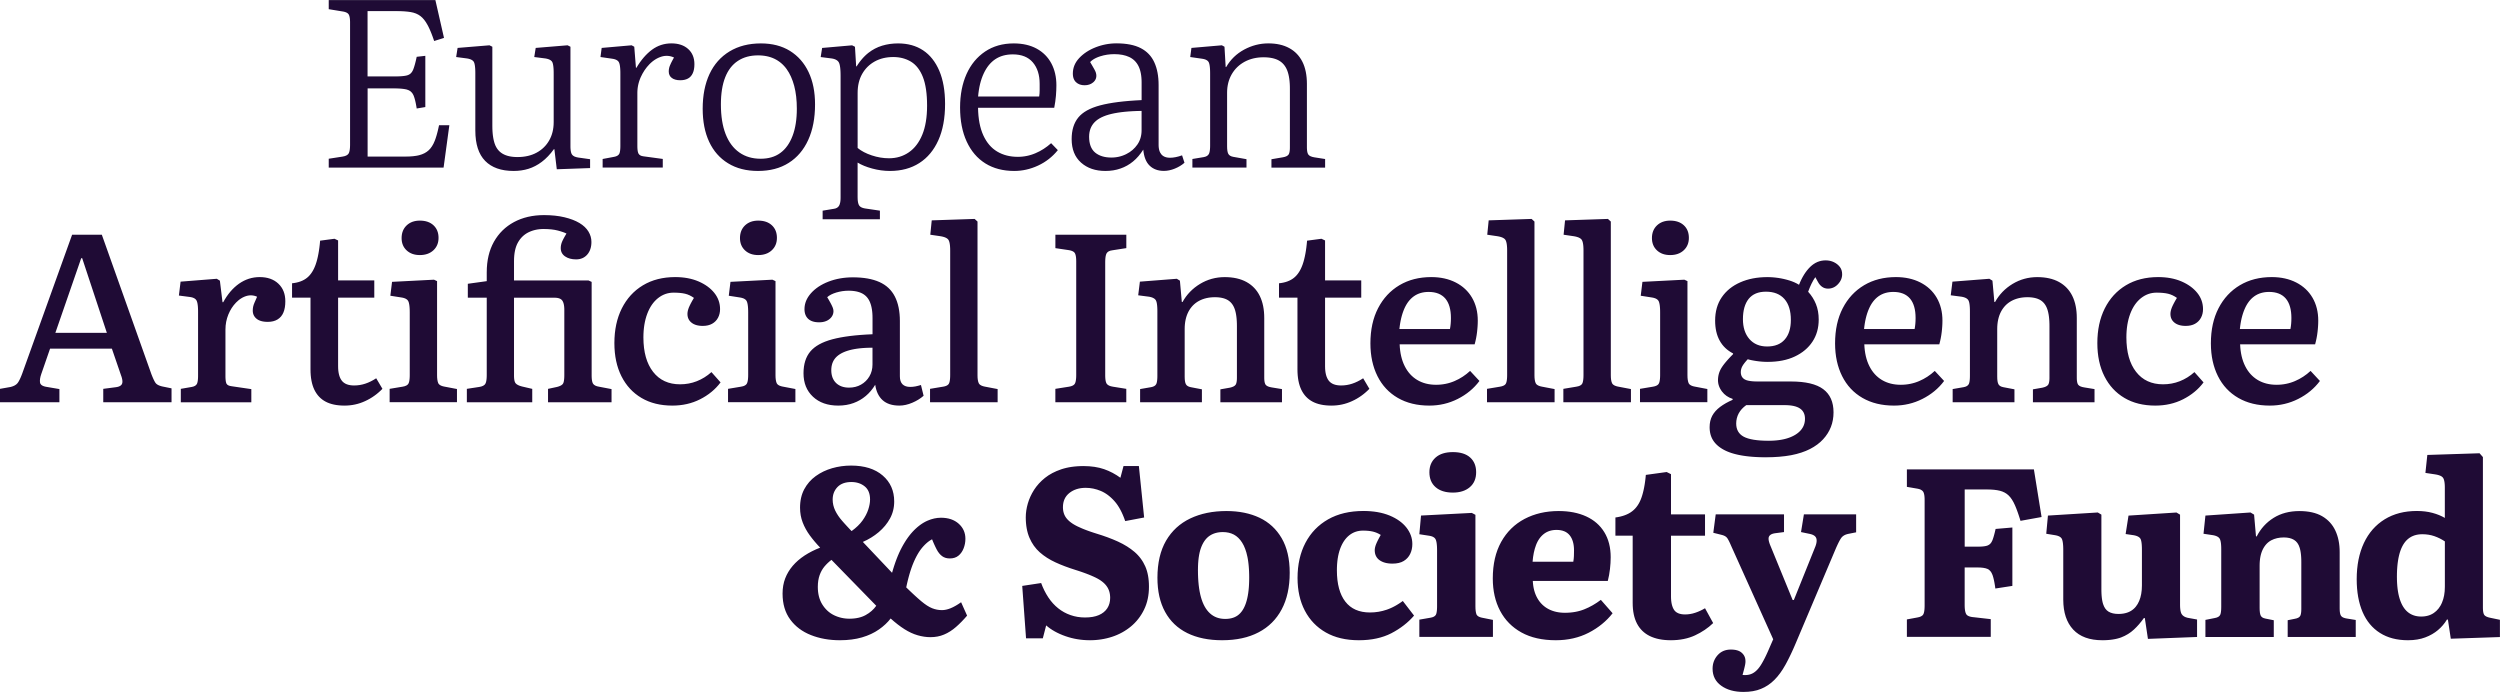 European Artificial Intelligence & Society Fund